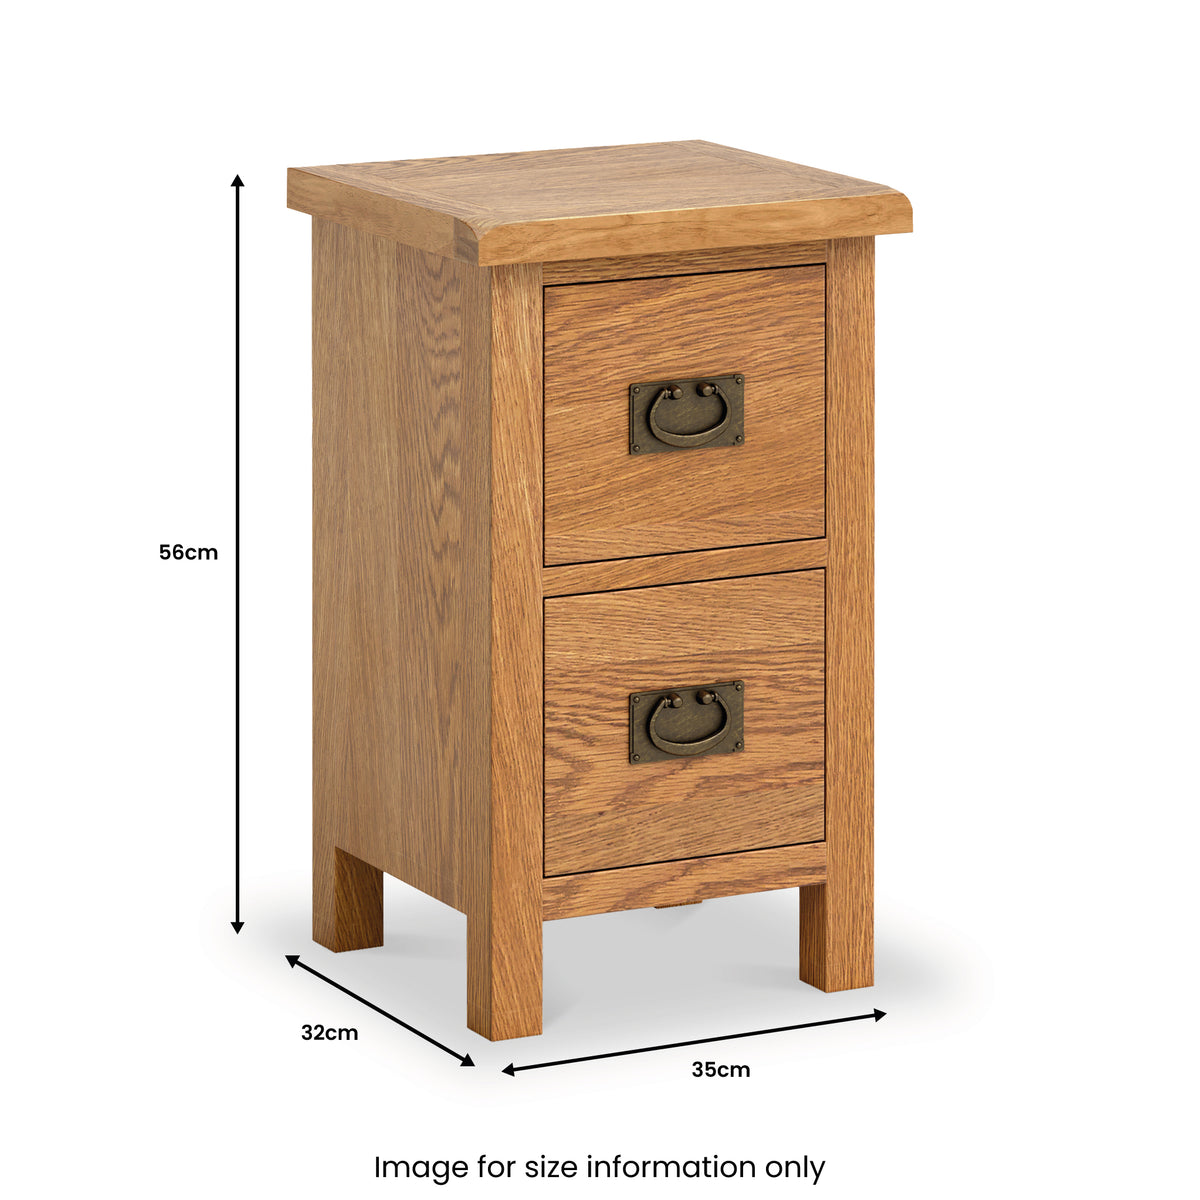 Surrey Slim Oak Bedside Table dimensions